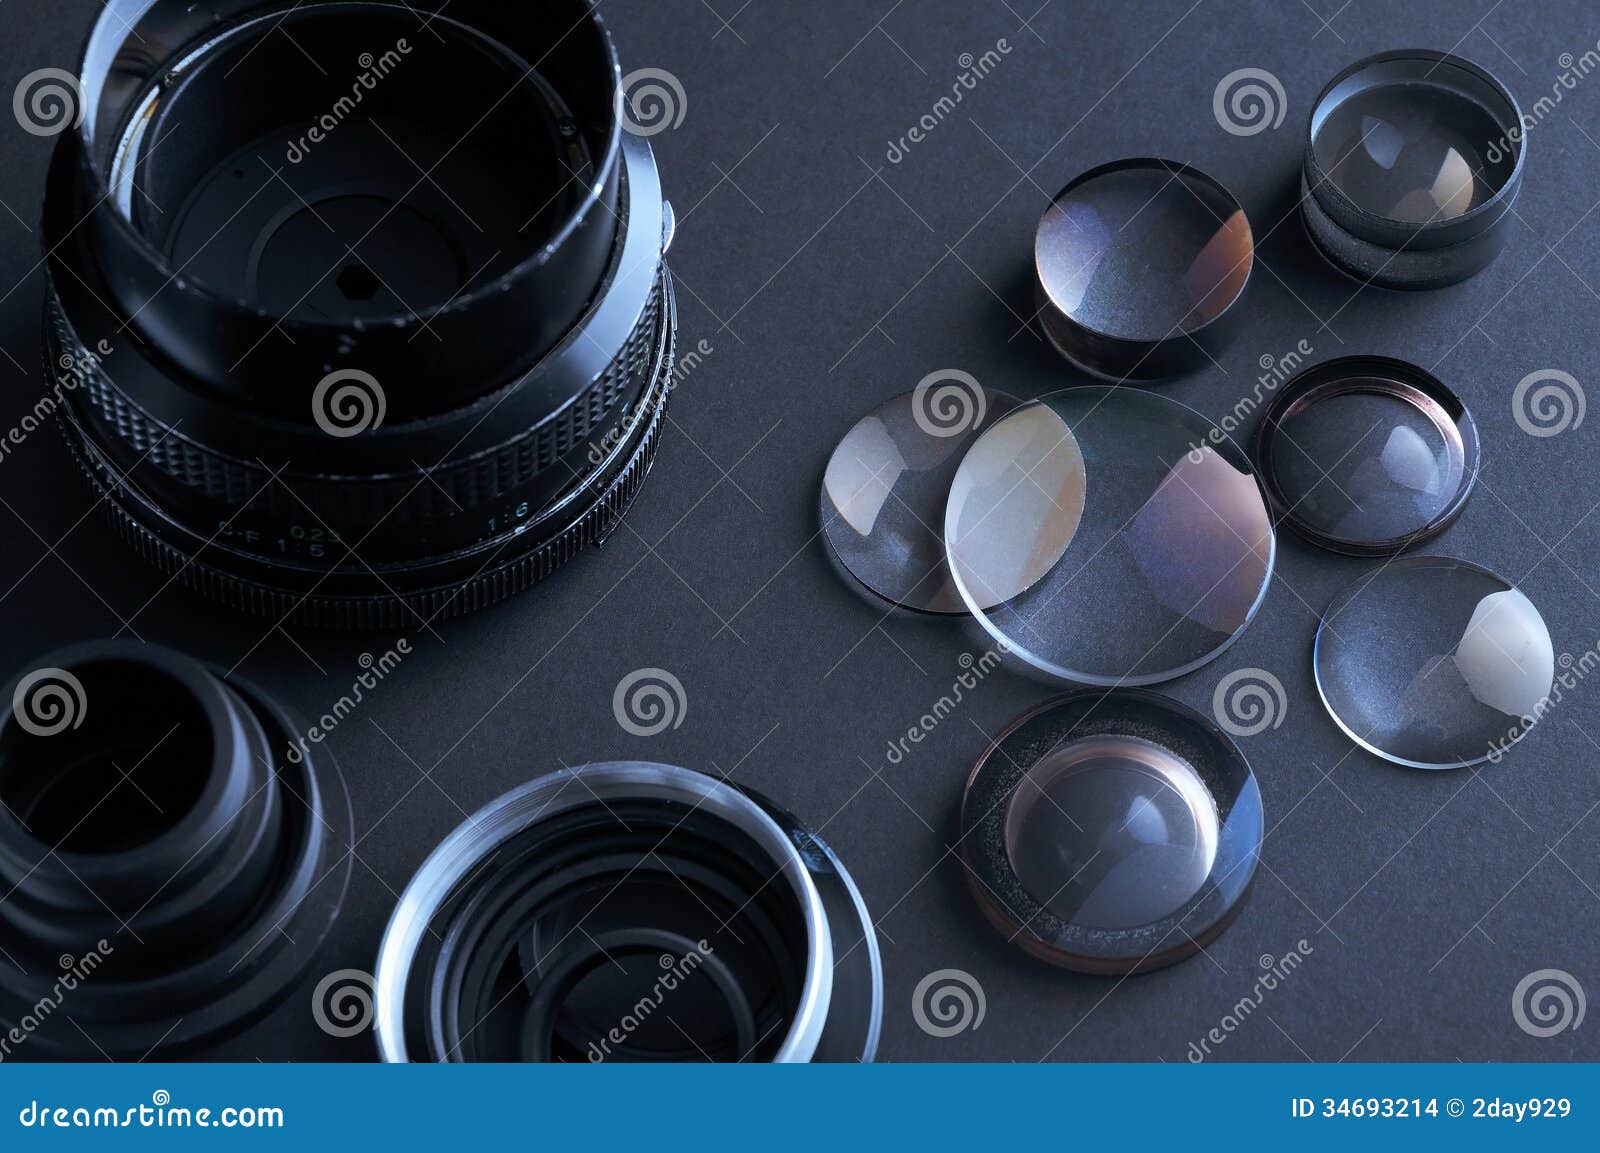 disassembled camera lenses